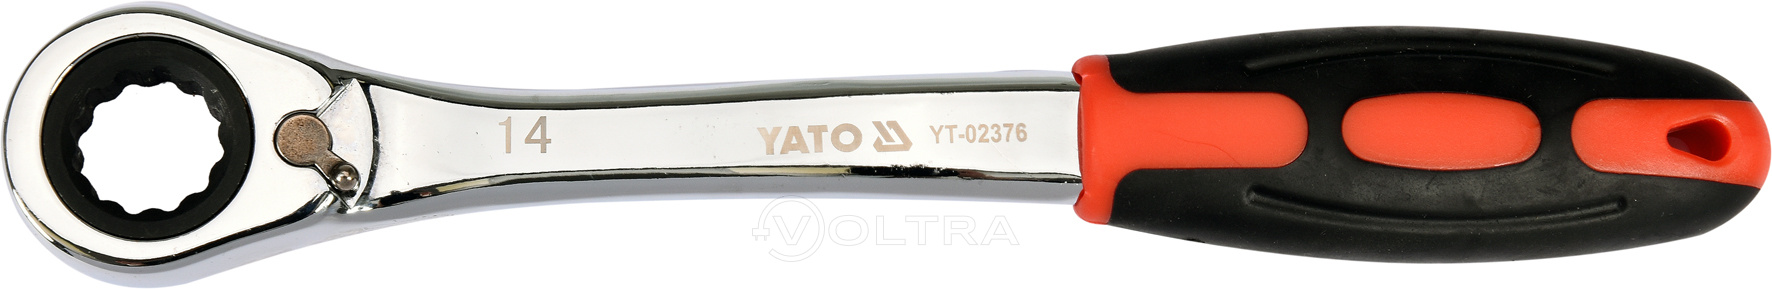 Ключ накидной с трещоткой 14мм CrV Yato YT-02376